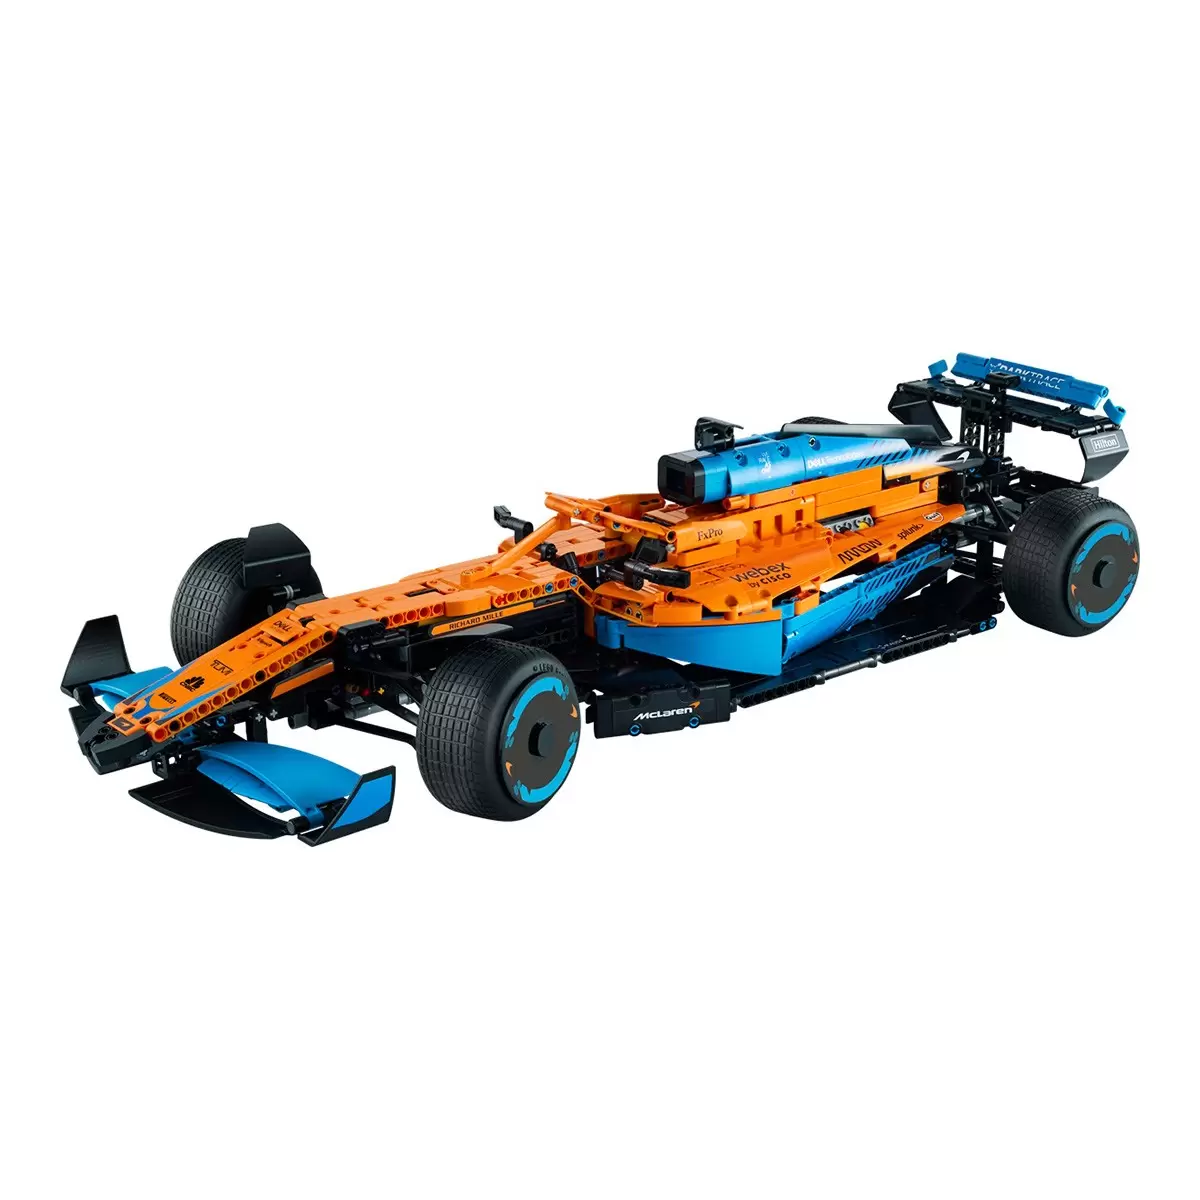 LEGO 科技系列 McLaren Formula 1 Race Car 賽車 42141